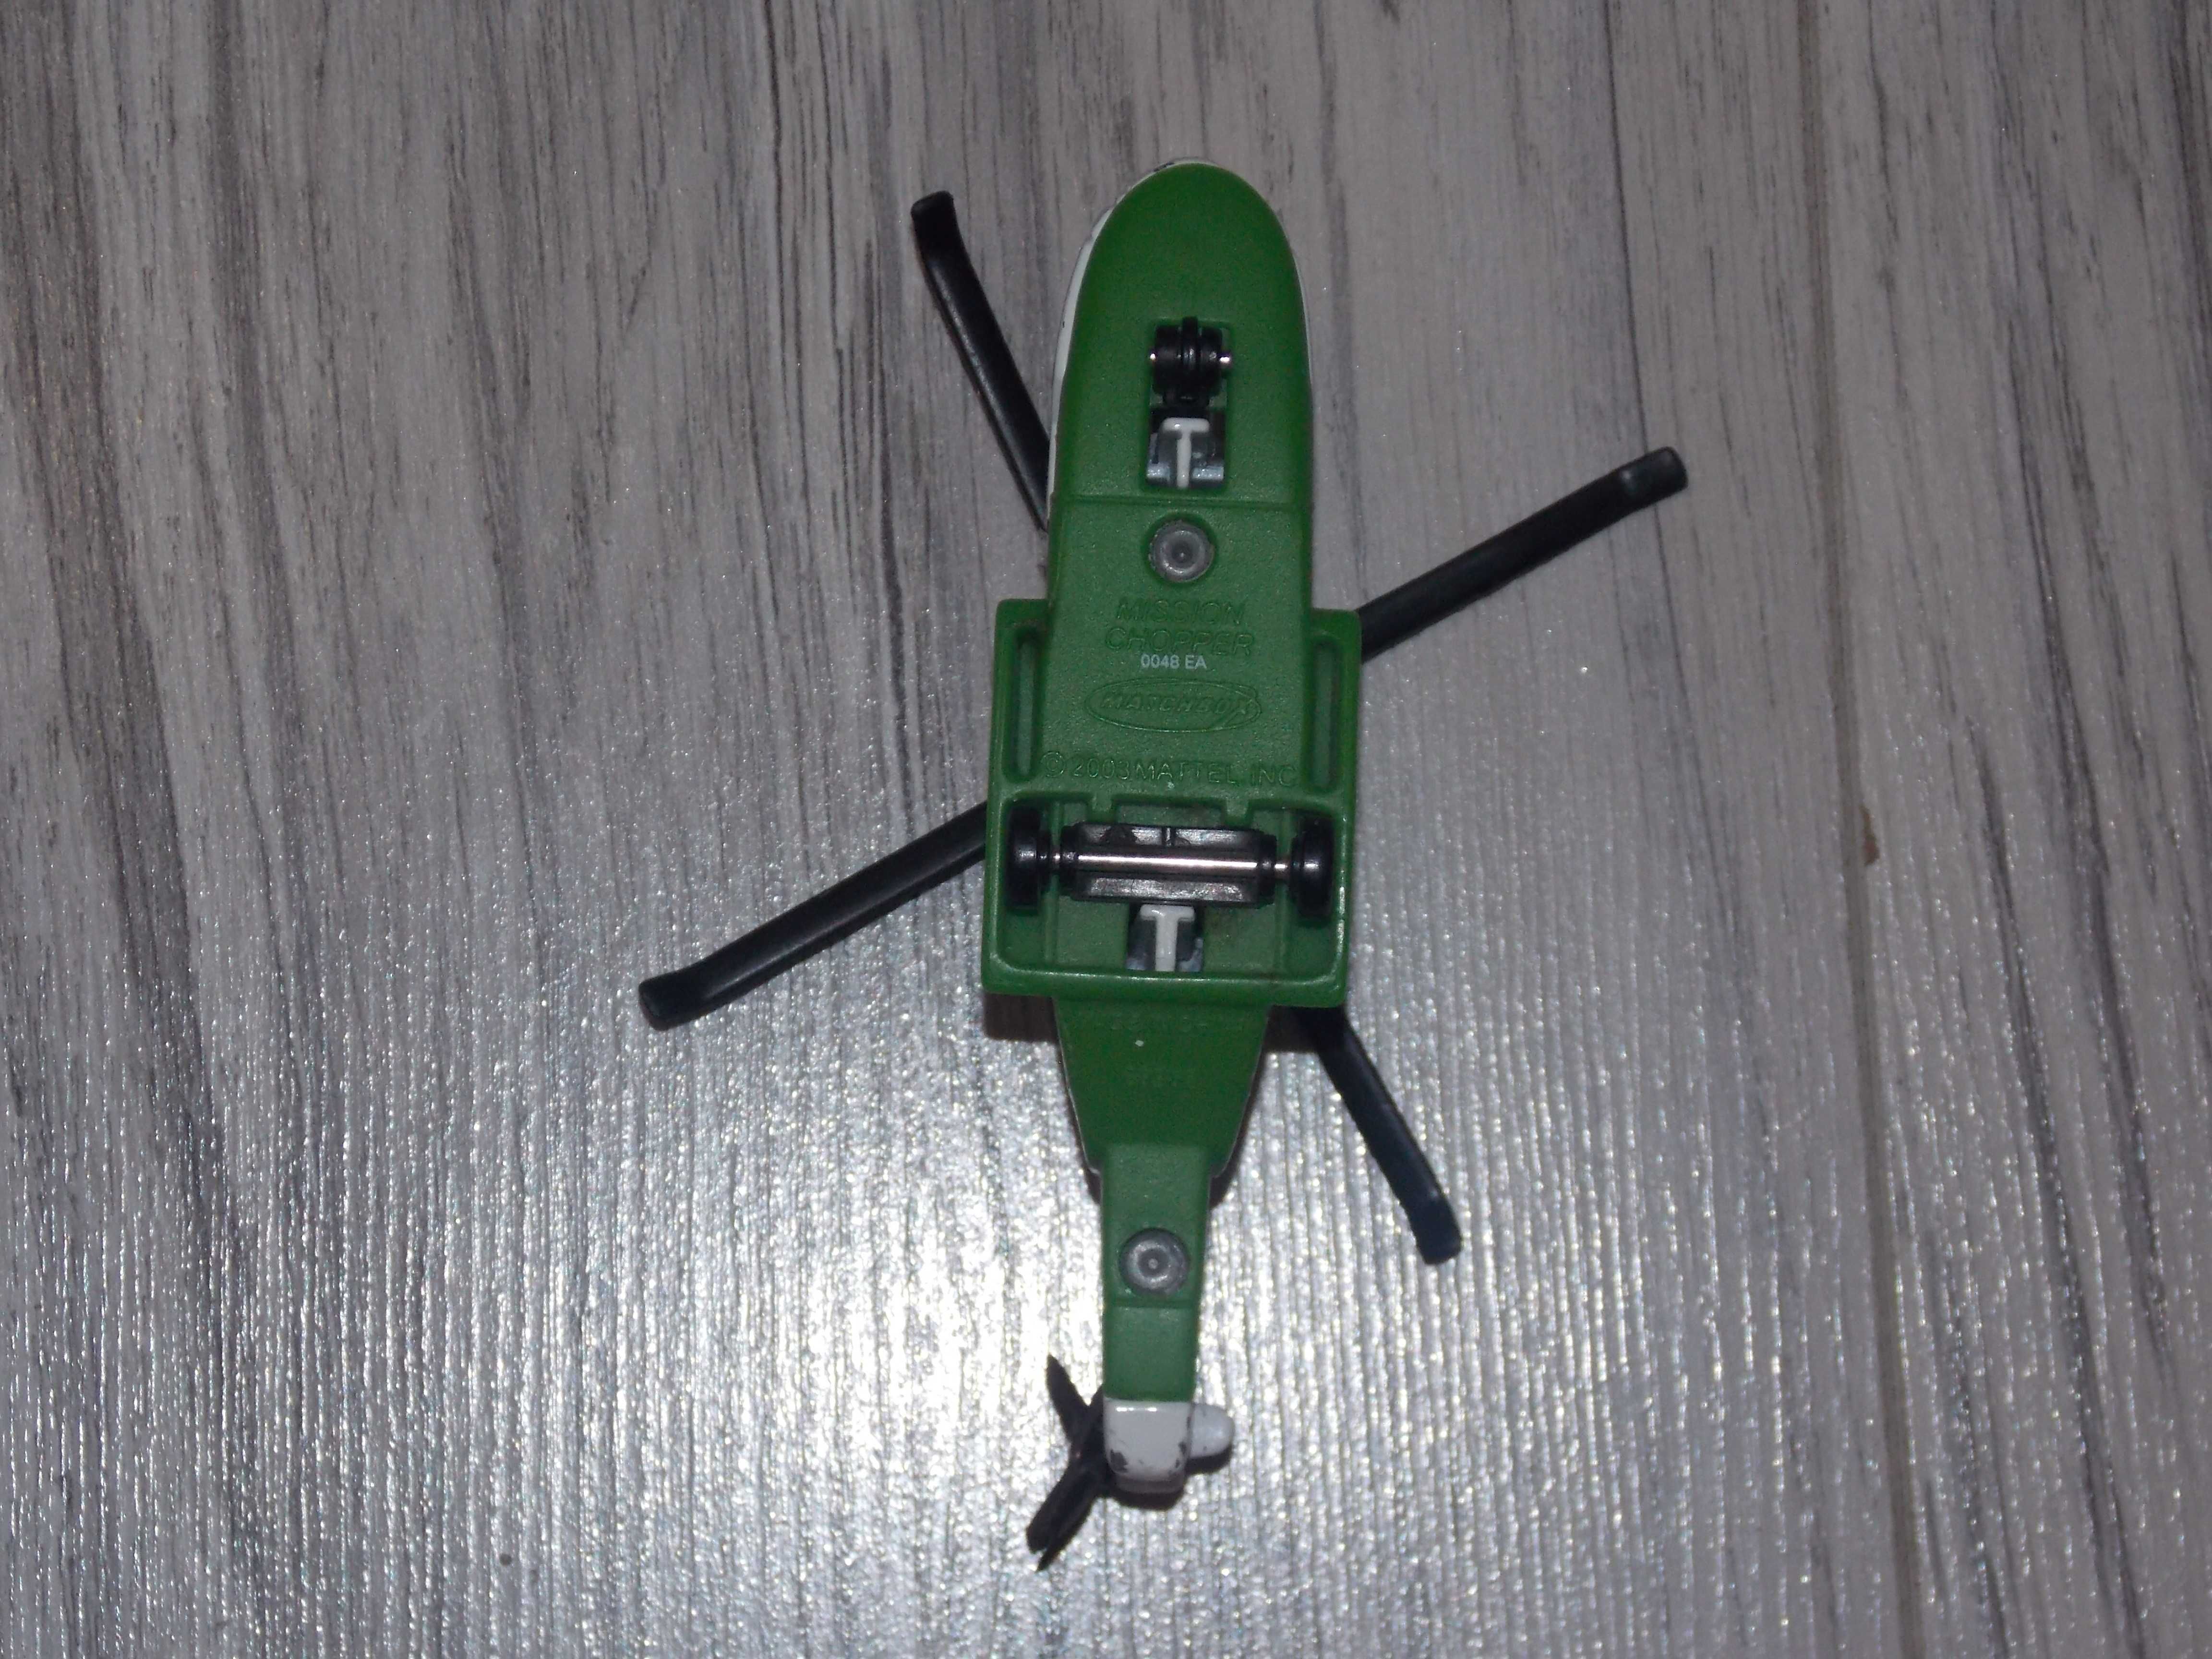 Matchbox mission chopper 2003r